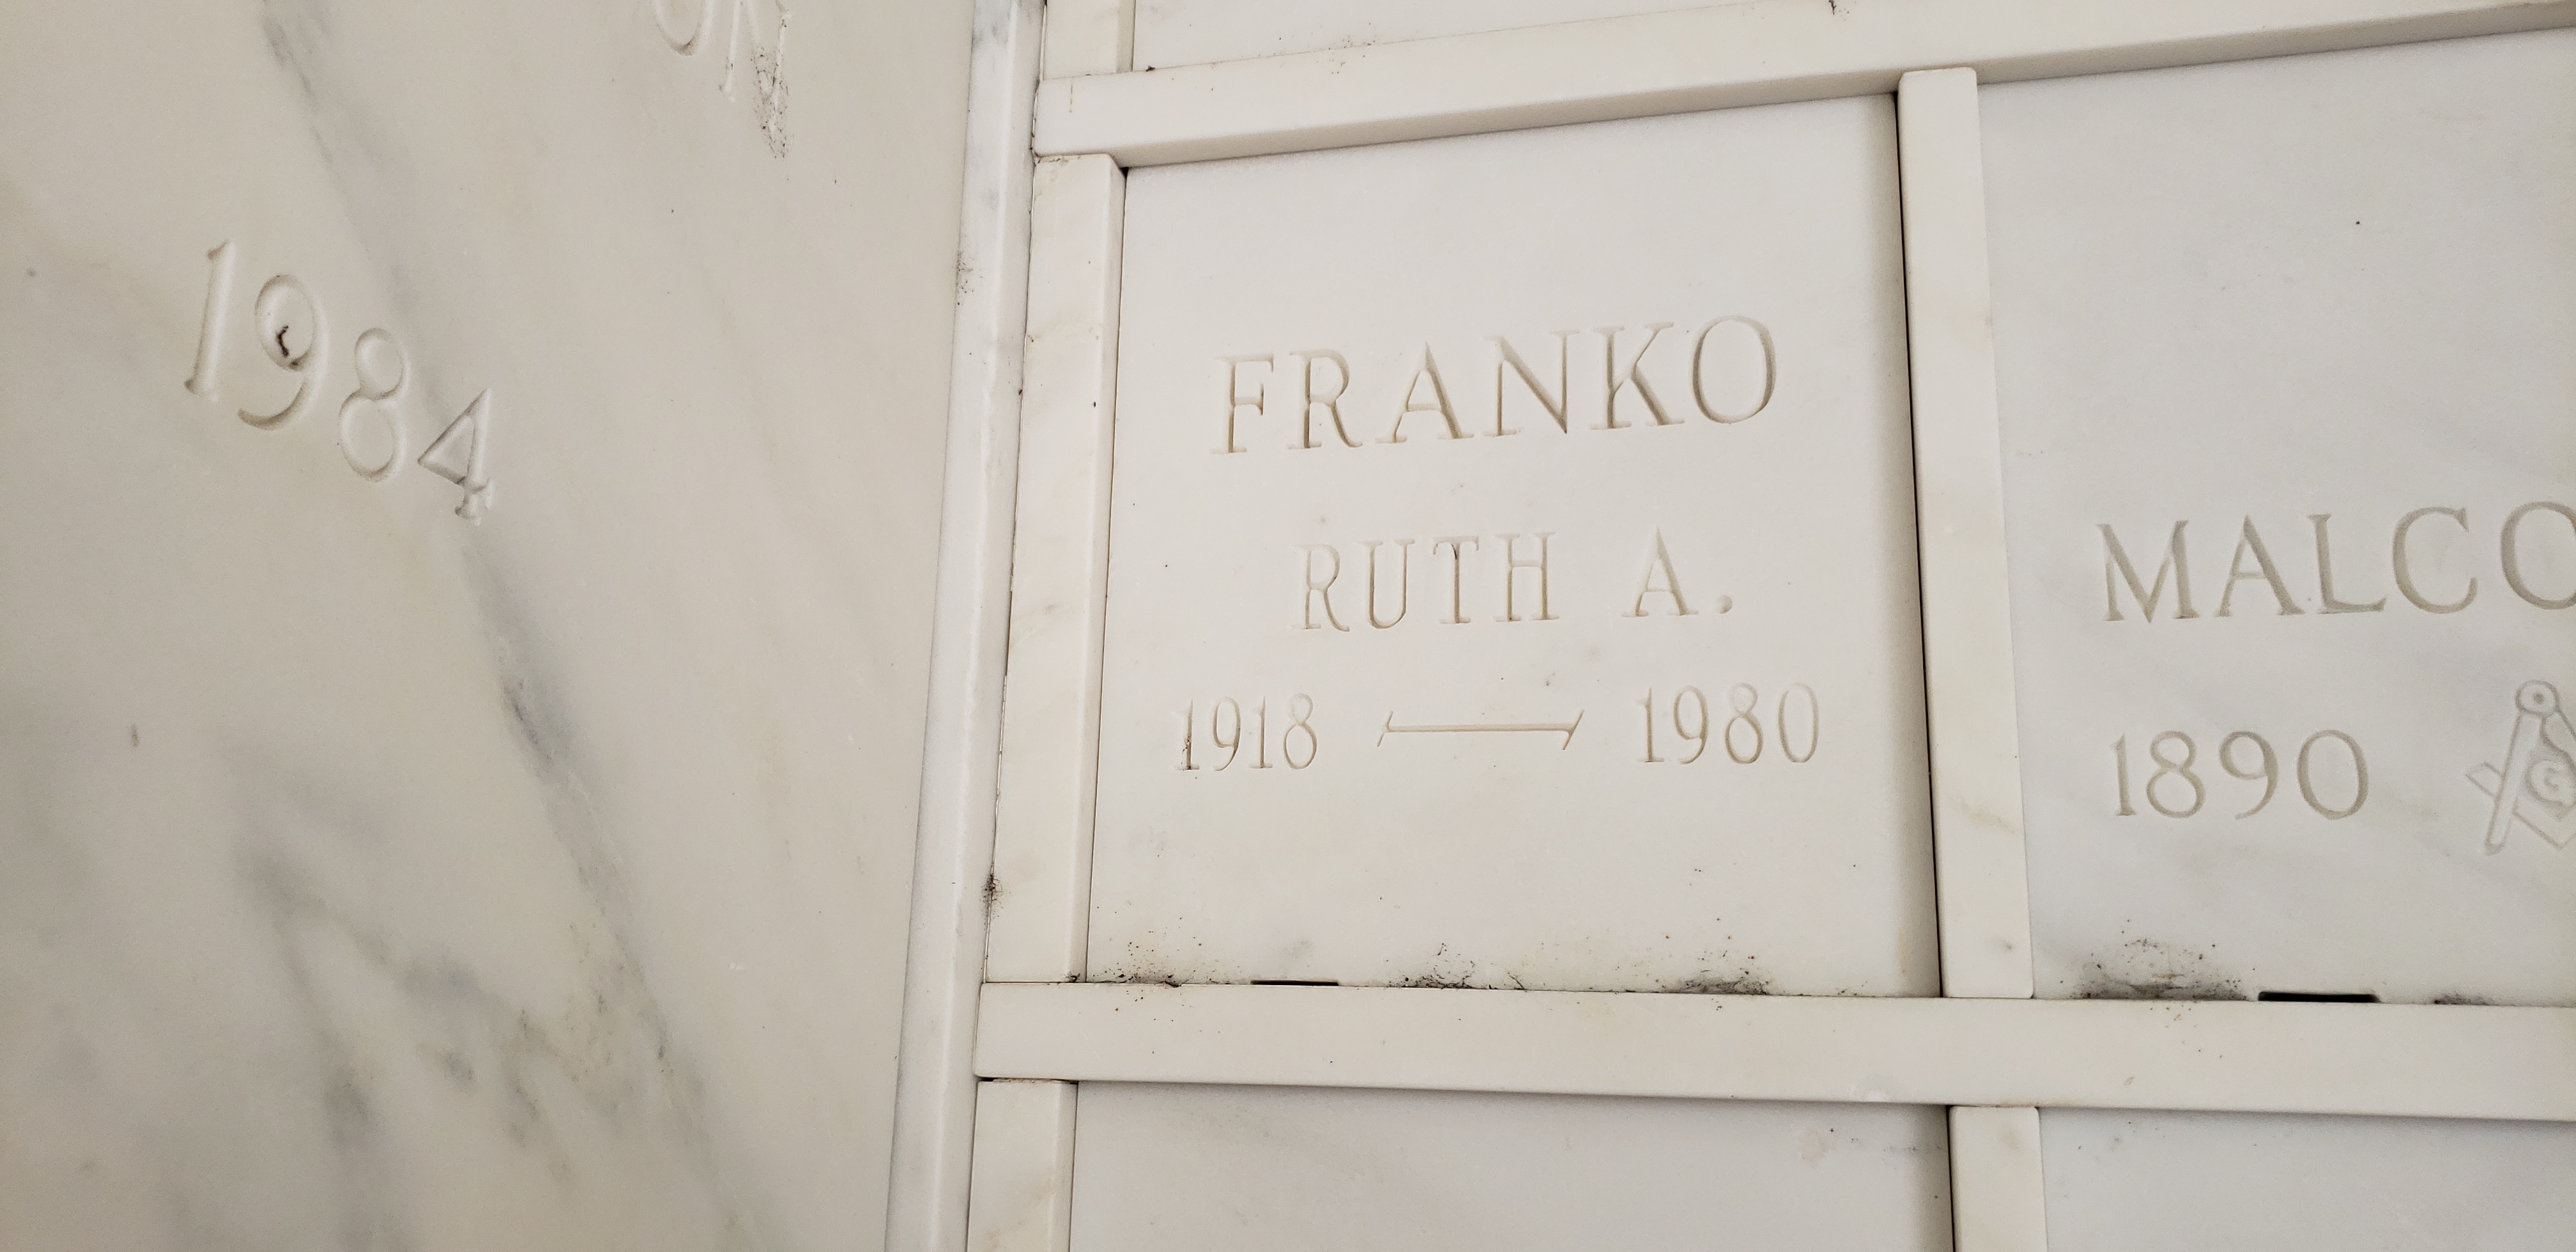 Ruth A Franko